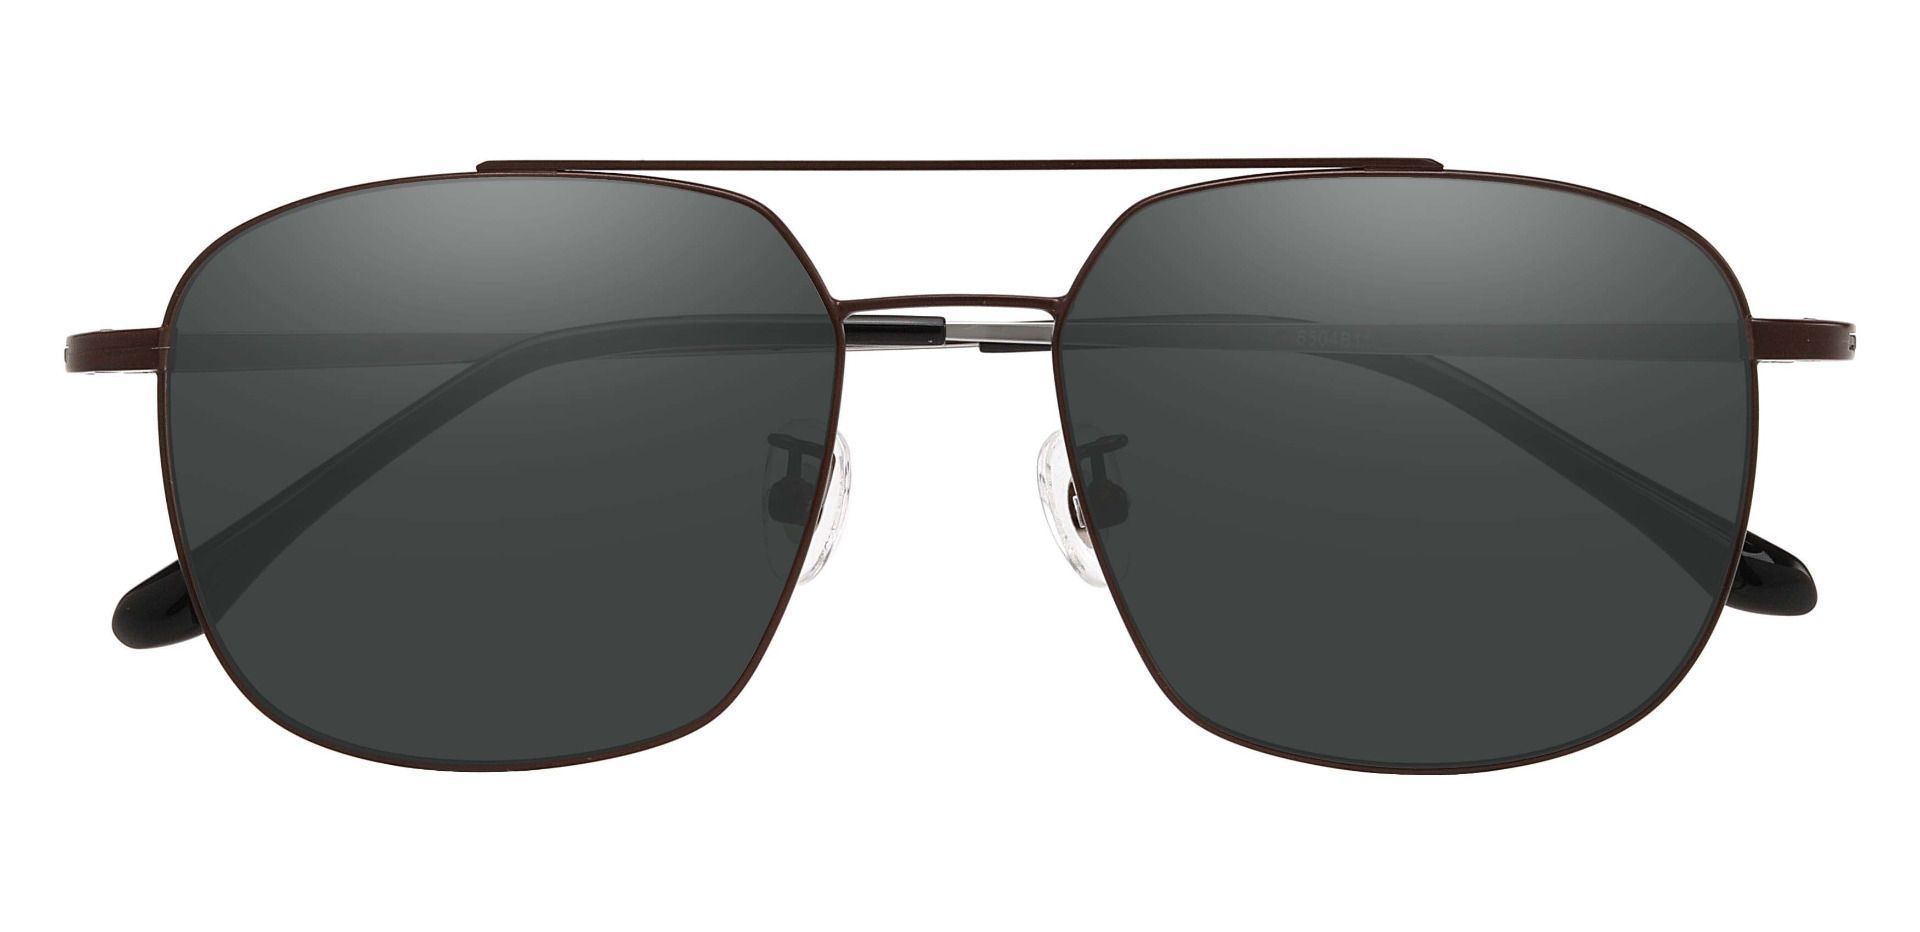 Trevor Aviator Non-Rx Sunglasses - Brown Frame With Gray Lenses